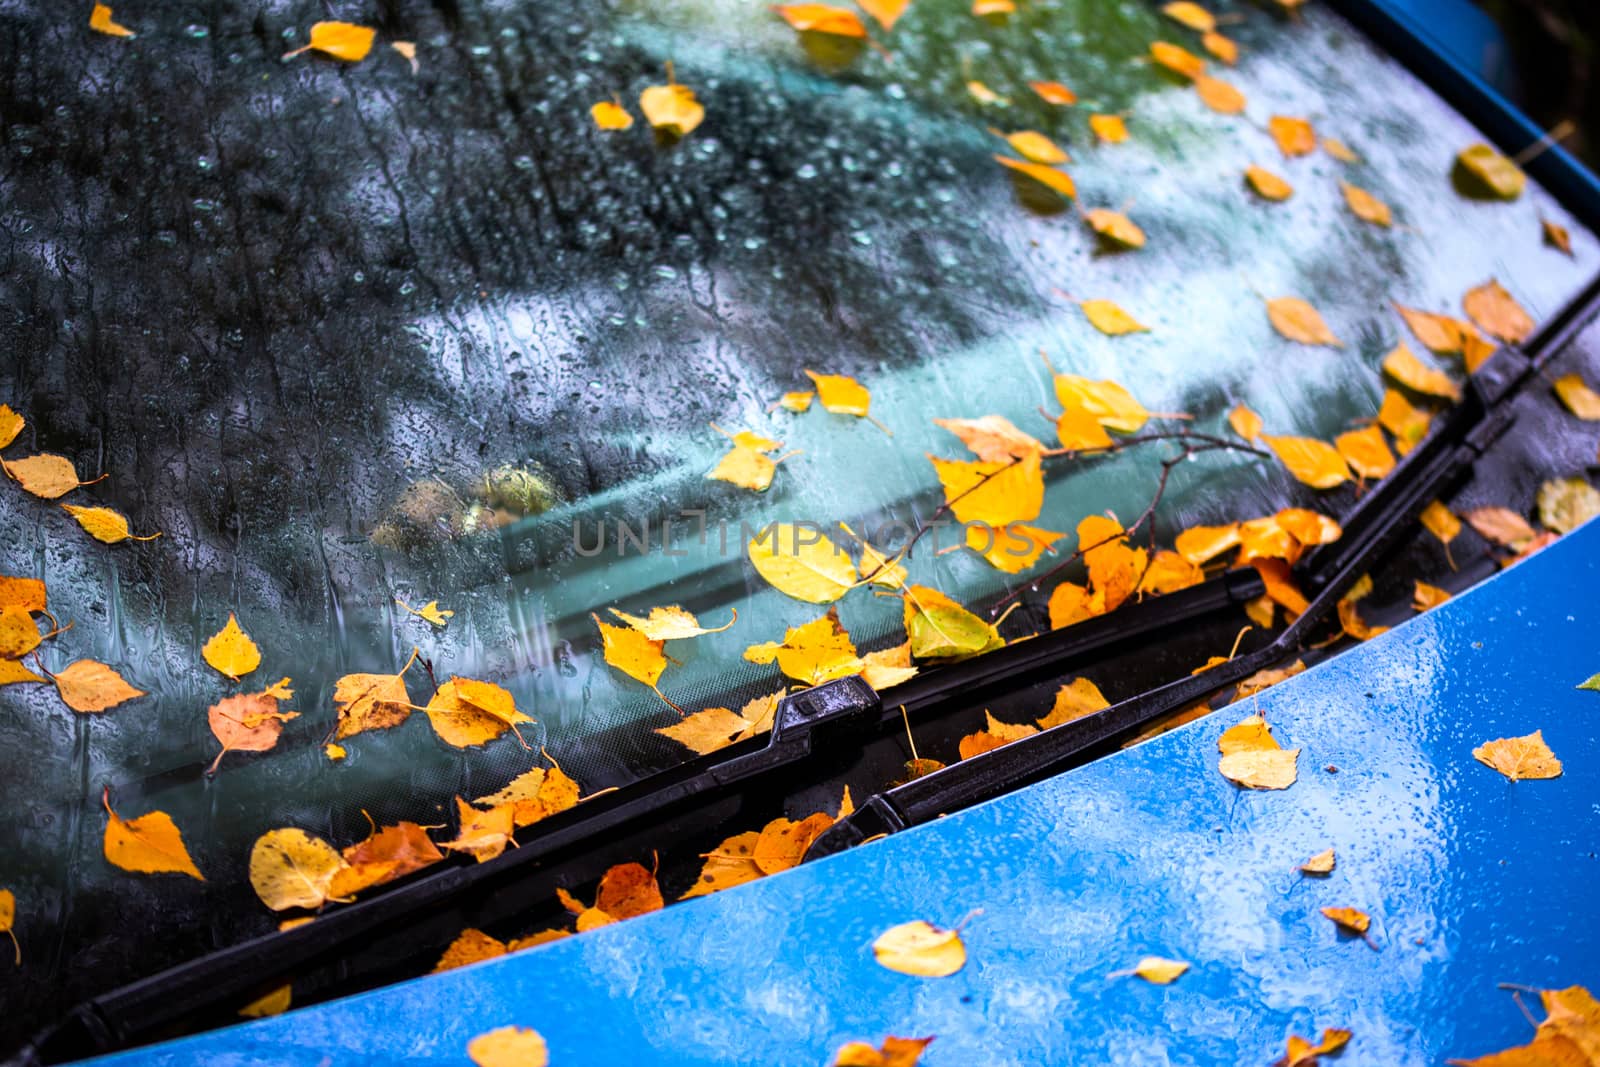 fallen birch leaves sticks on ultramarine blue car bonnet and windscreen - close up autumn selective focus background by z1b